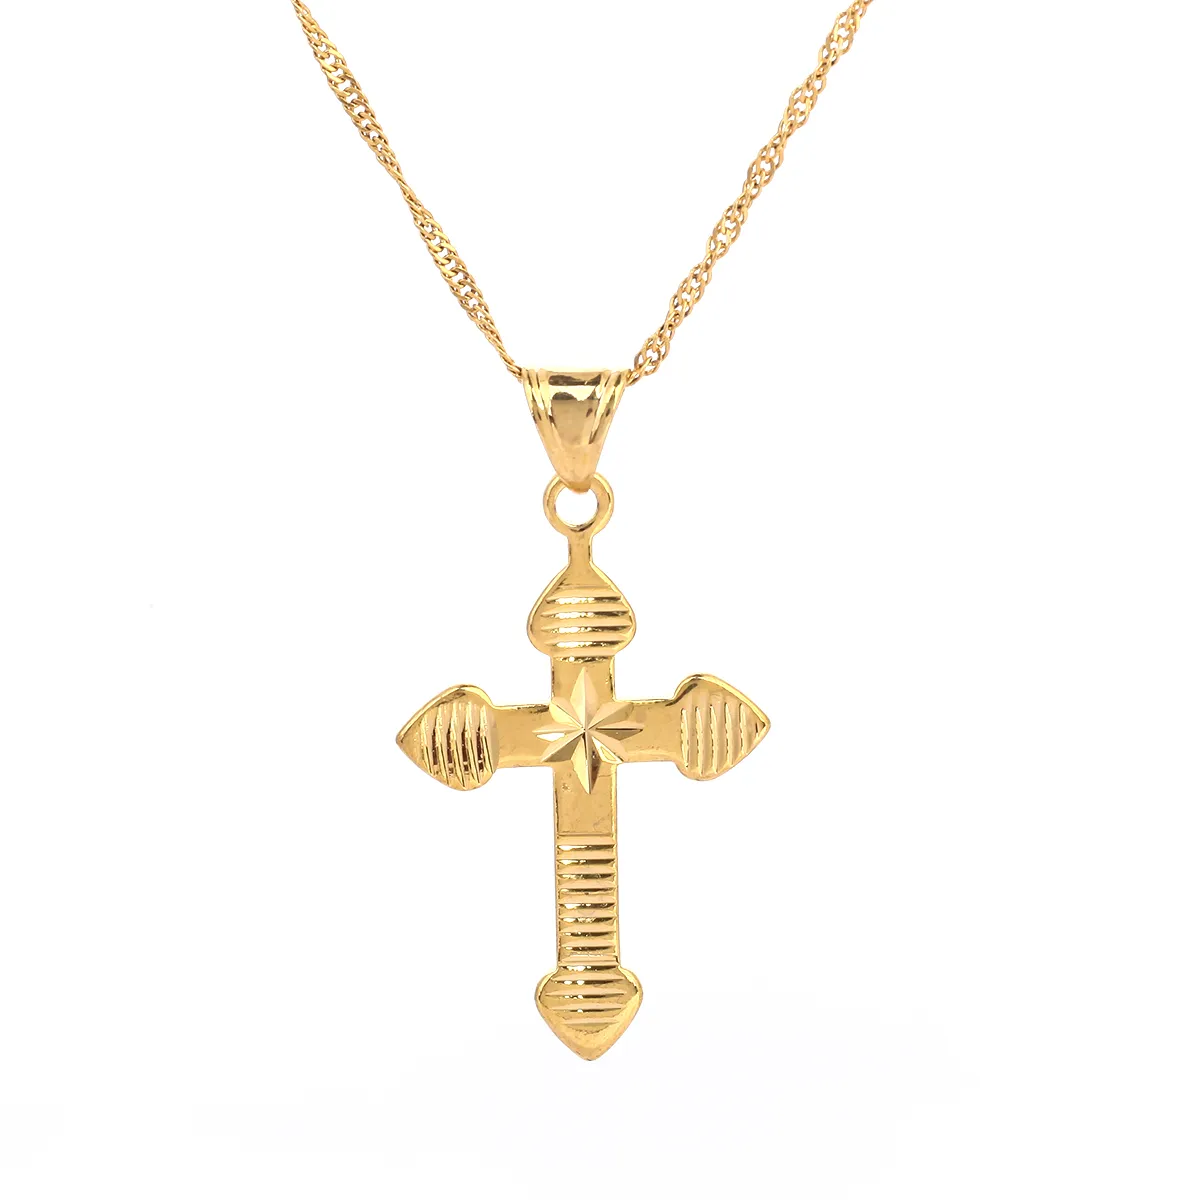 Fashion Women Pendant Necklace With Chain Gold Color Jewelry Antique Cross Crucifix Jesus Cross Pendant Necklace